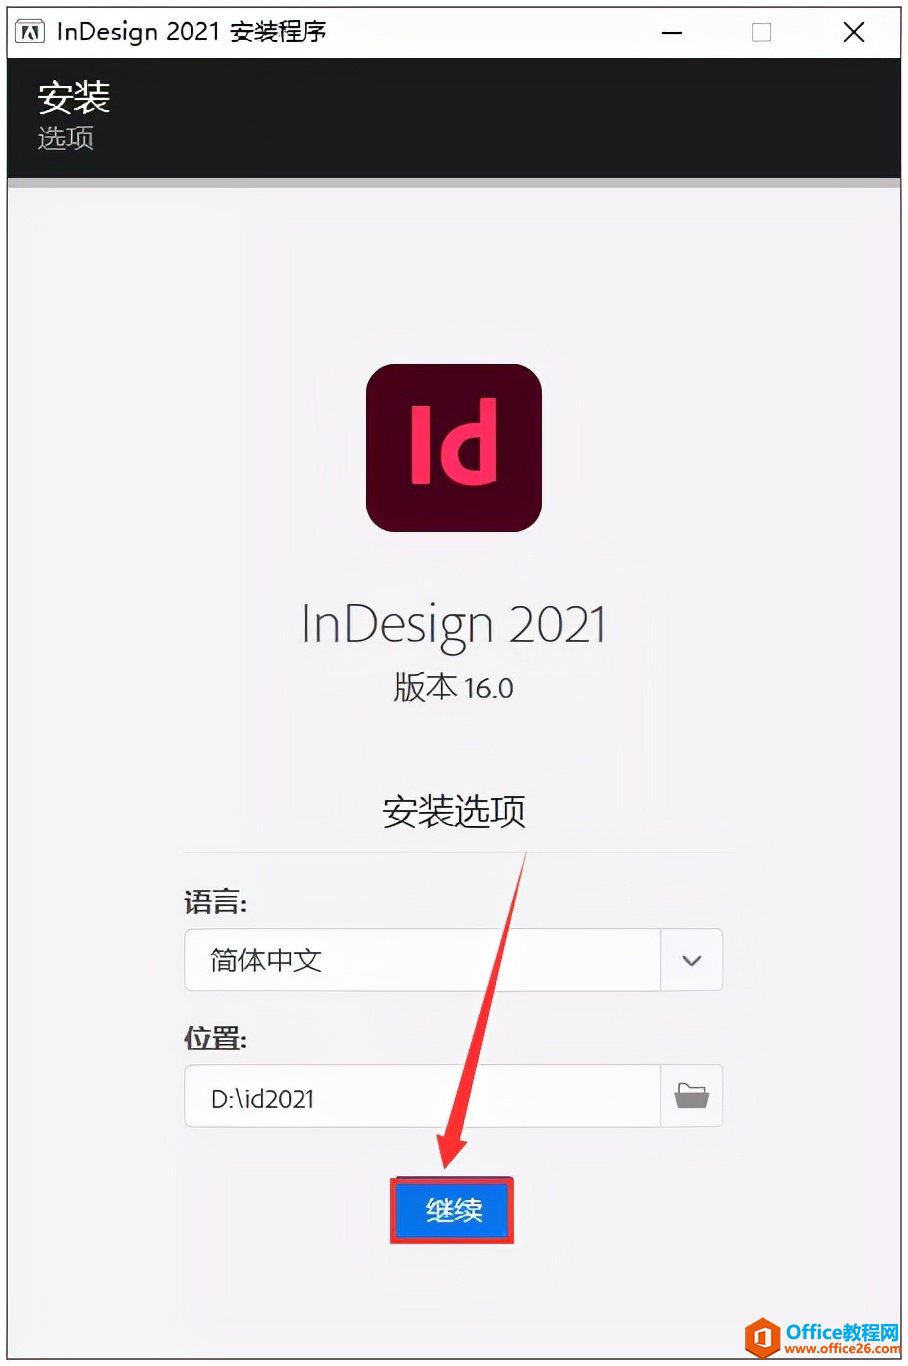 InDesign 2021 ID软件安装包下载地址及安装教程